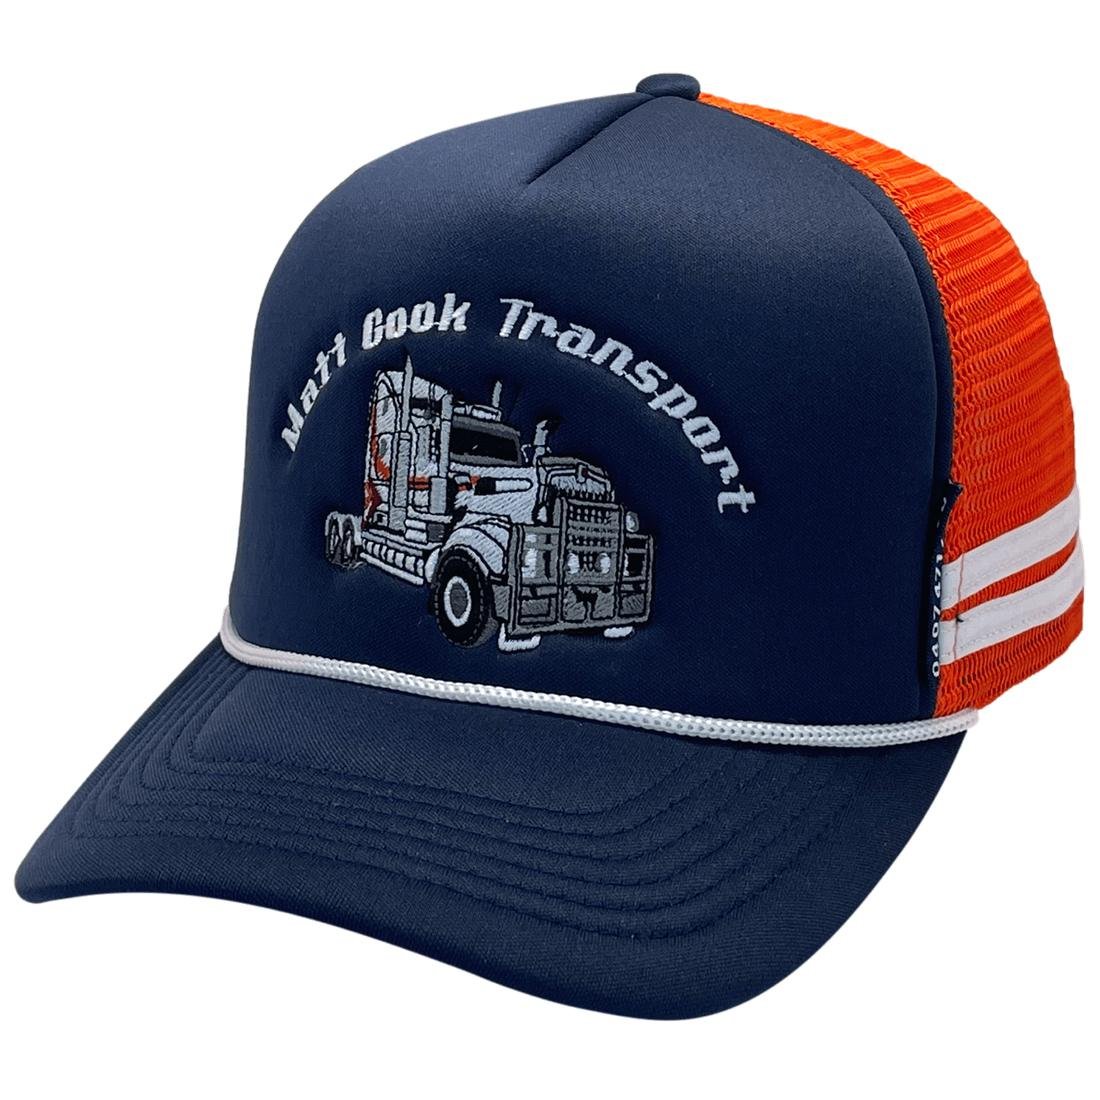 Matt Cook Transport Custom Foamie Trucker Hat